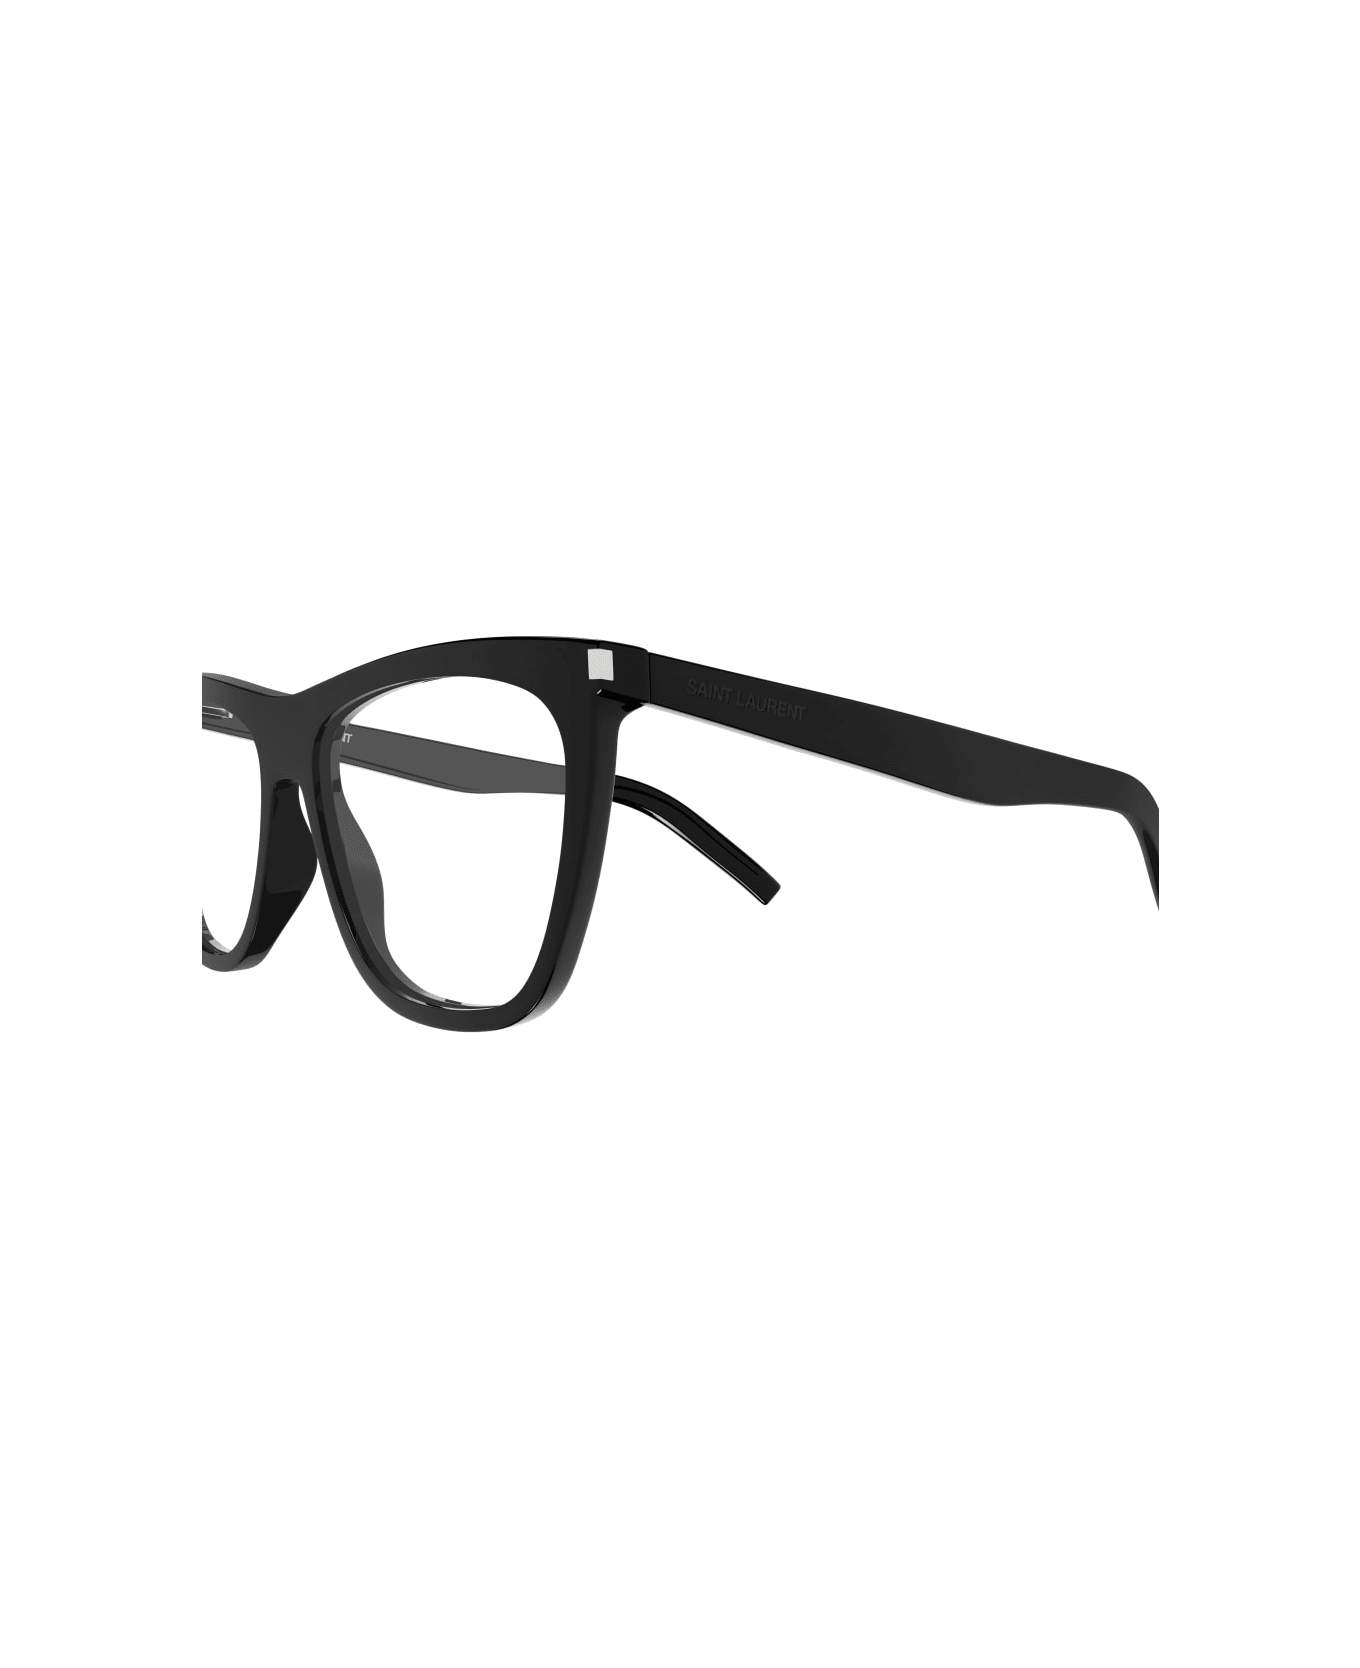 Saint Laurent Eyewear SL 518 Eyewear - Black Black Transpare